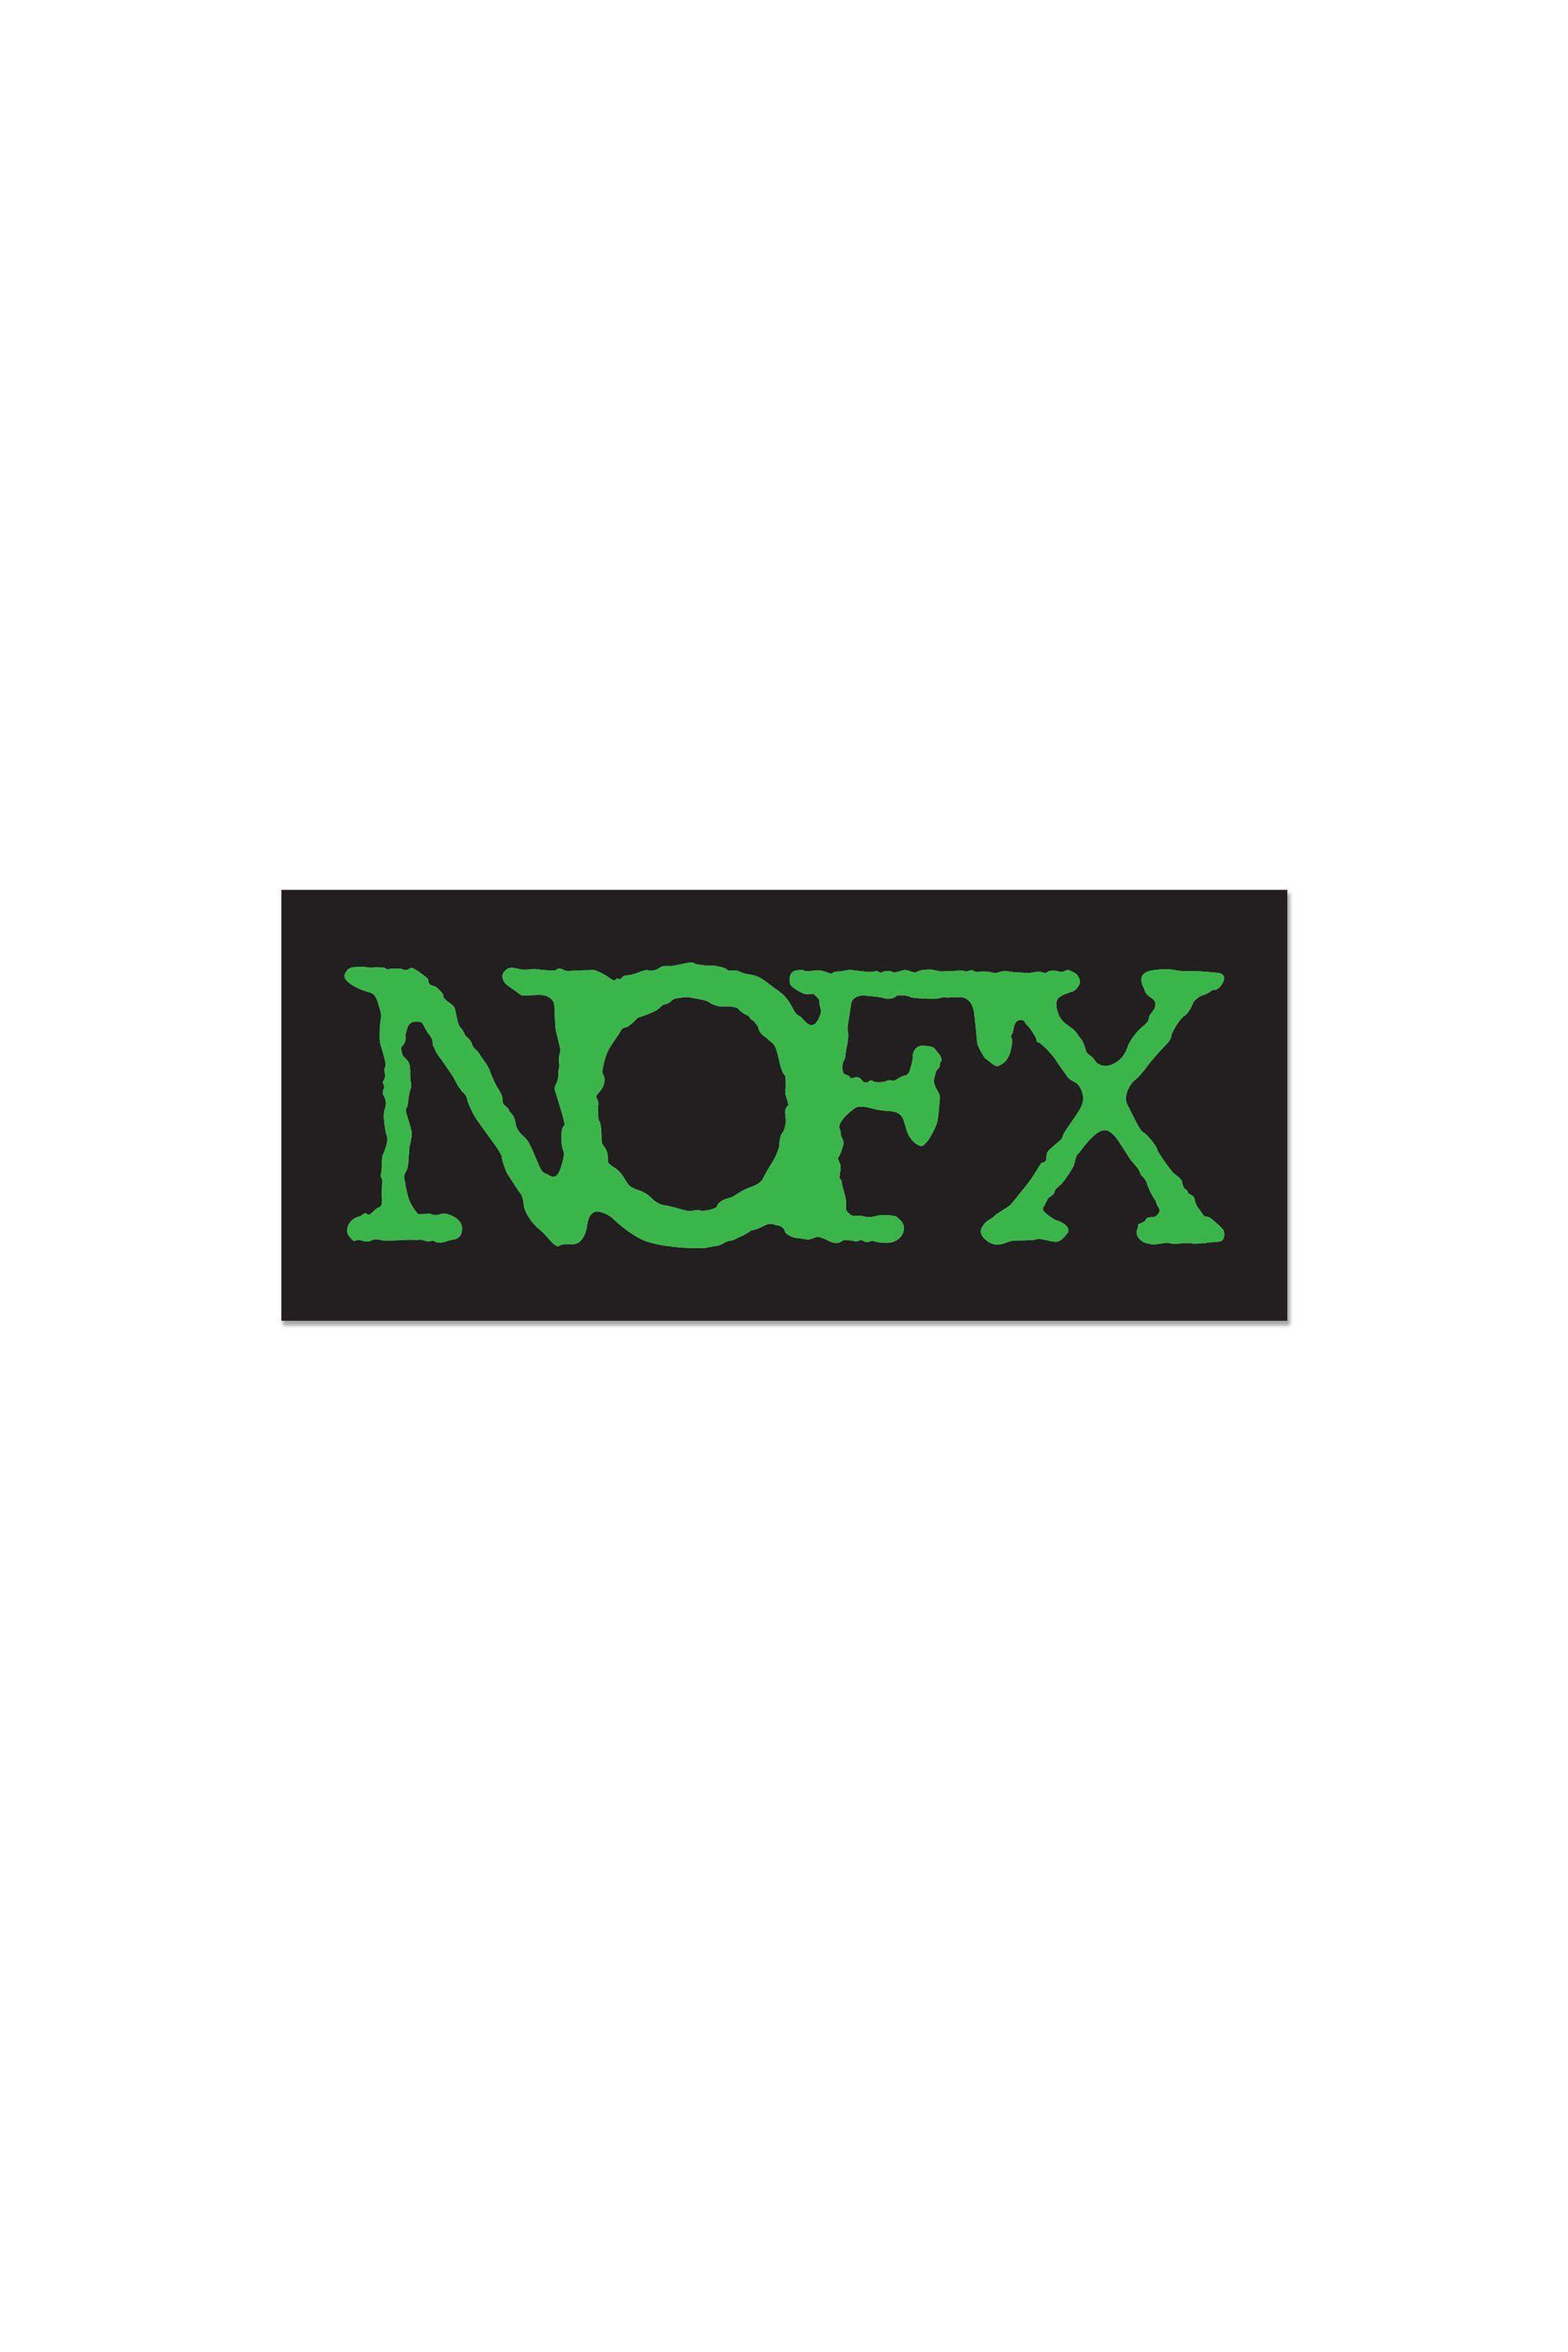 Nofx Logo - Logo Sticker